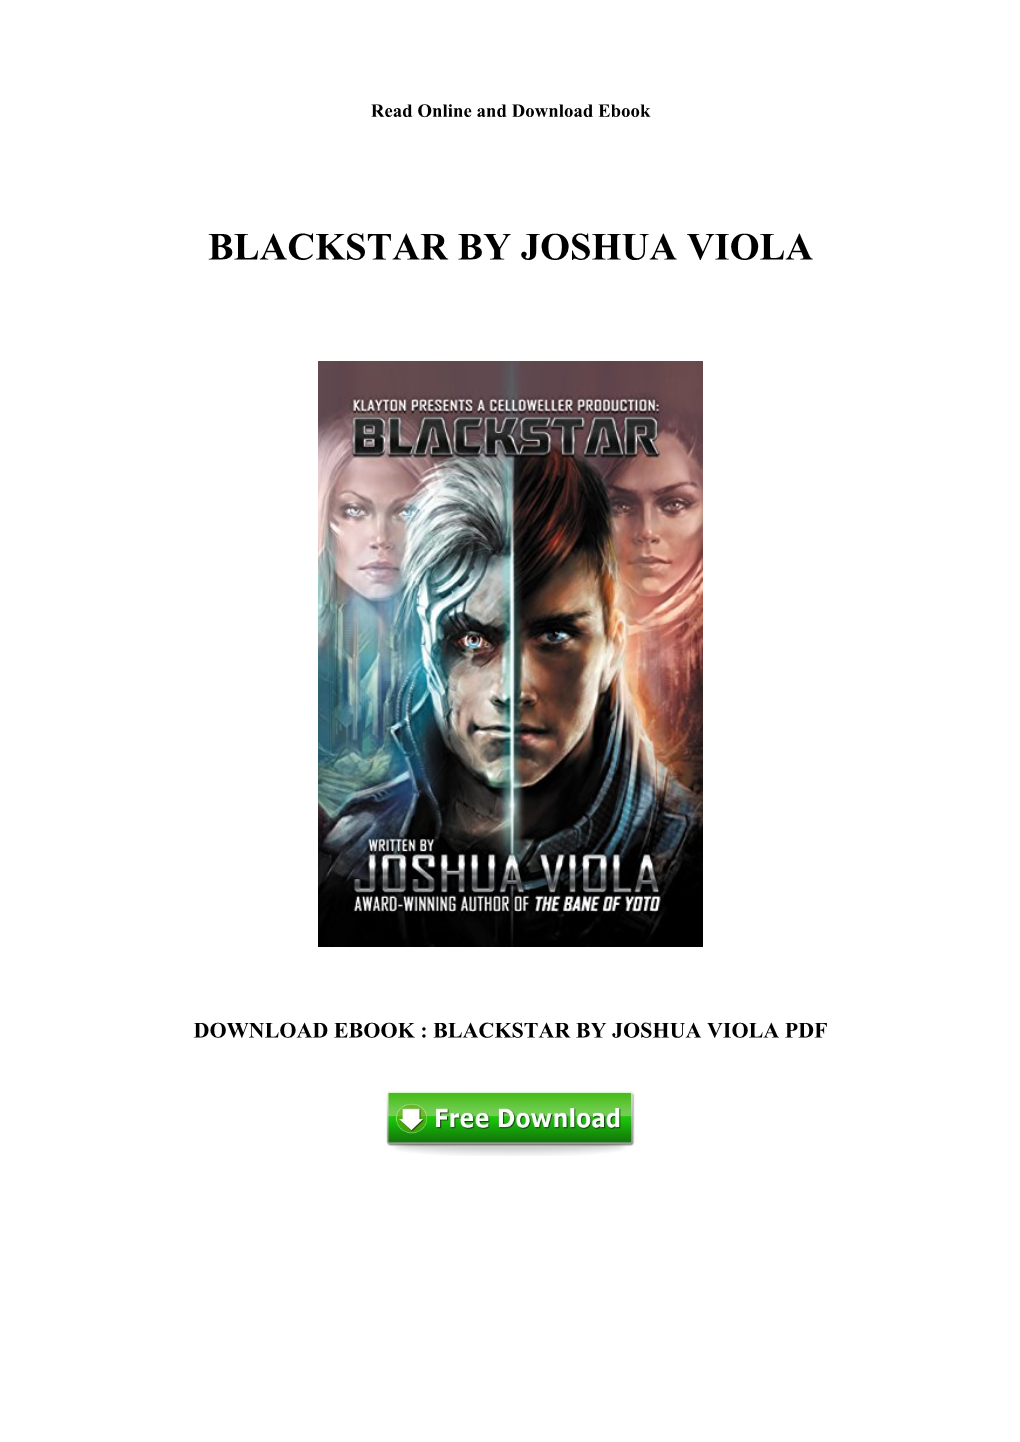 Ebook Free Blackstar by Joshua Viola